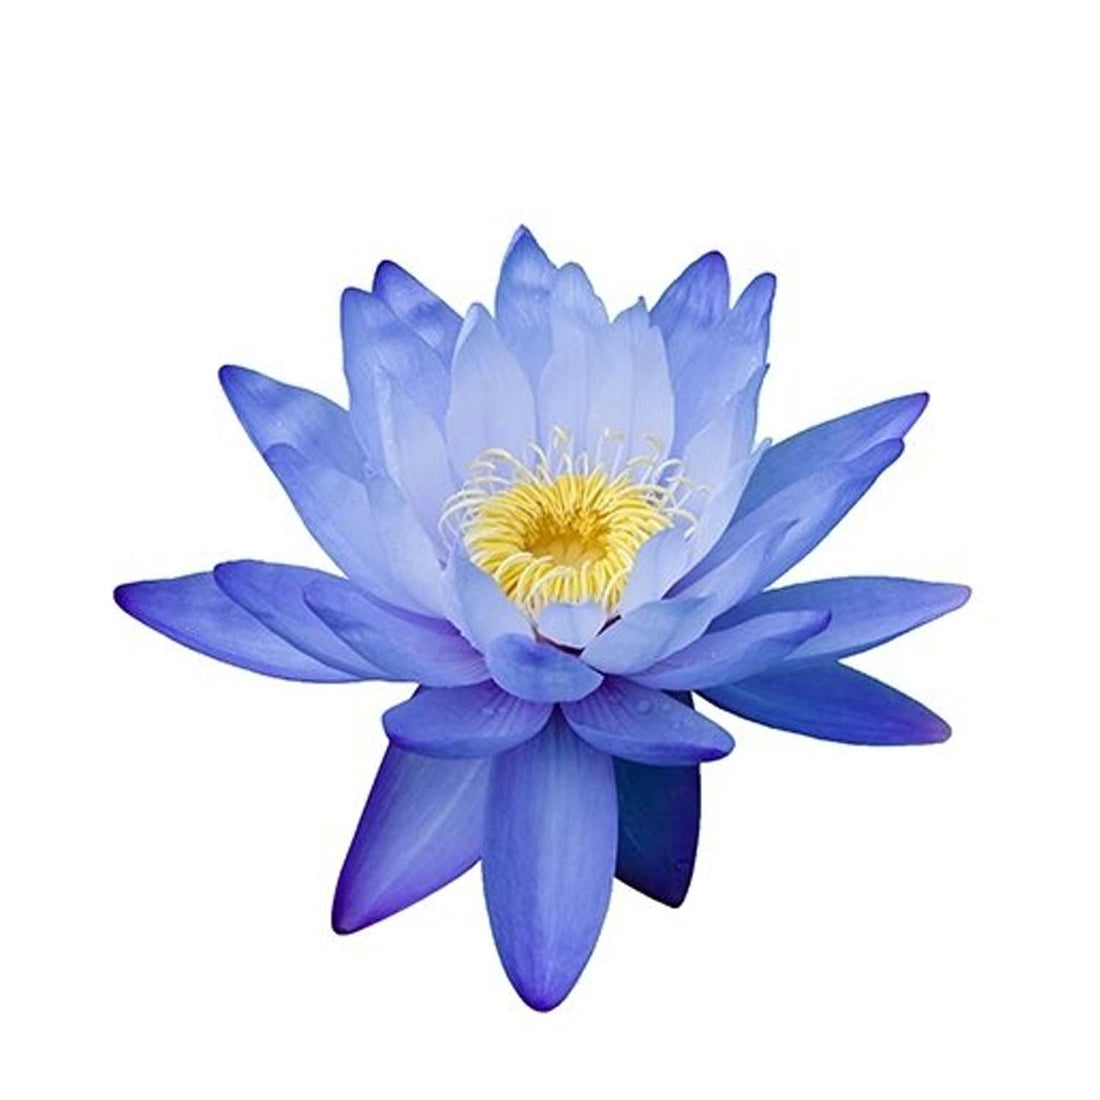 Nymphaea Caerulea Flower Hydrosol: Blue lotus flower on a clean white background